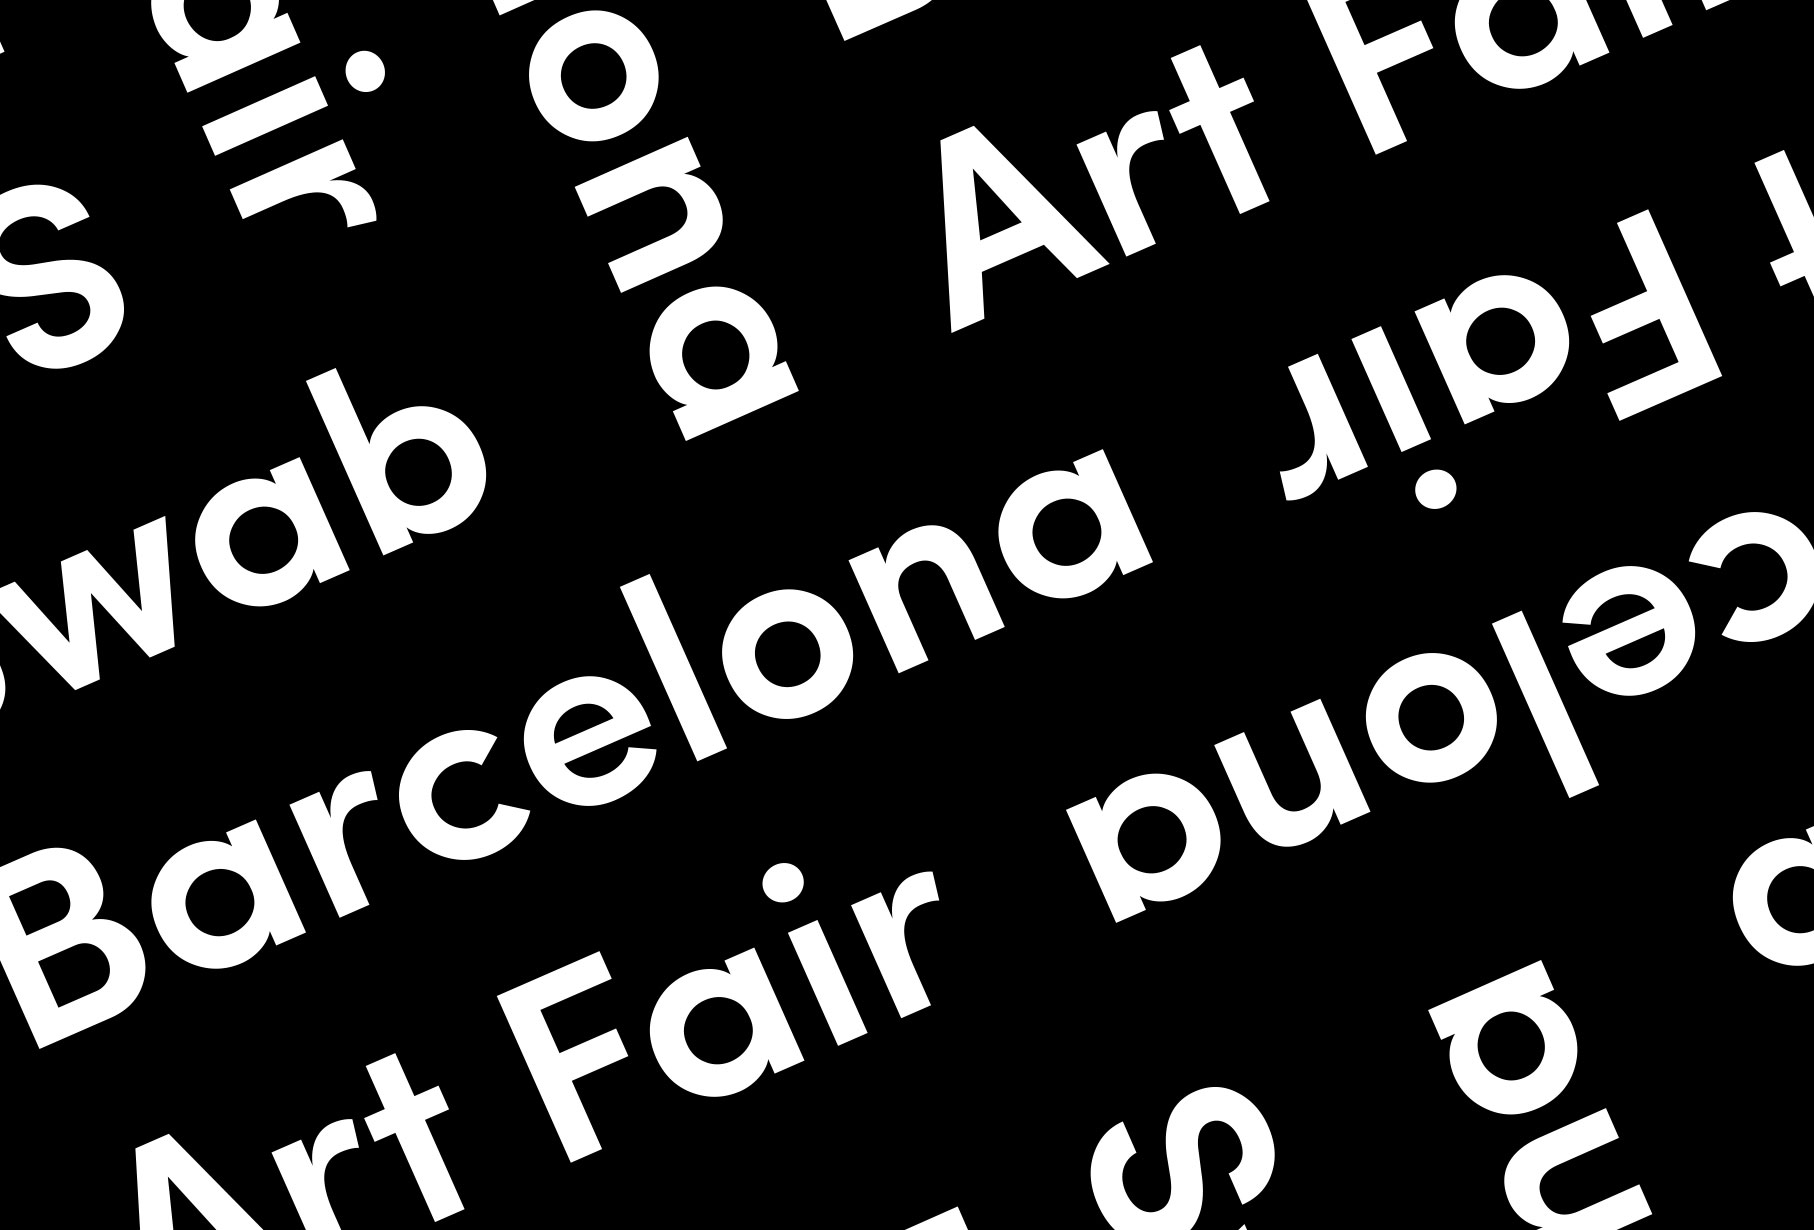 swab art fair barcelona with 3punts galeria 